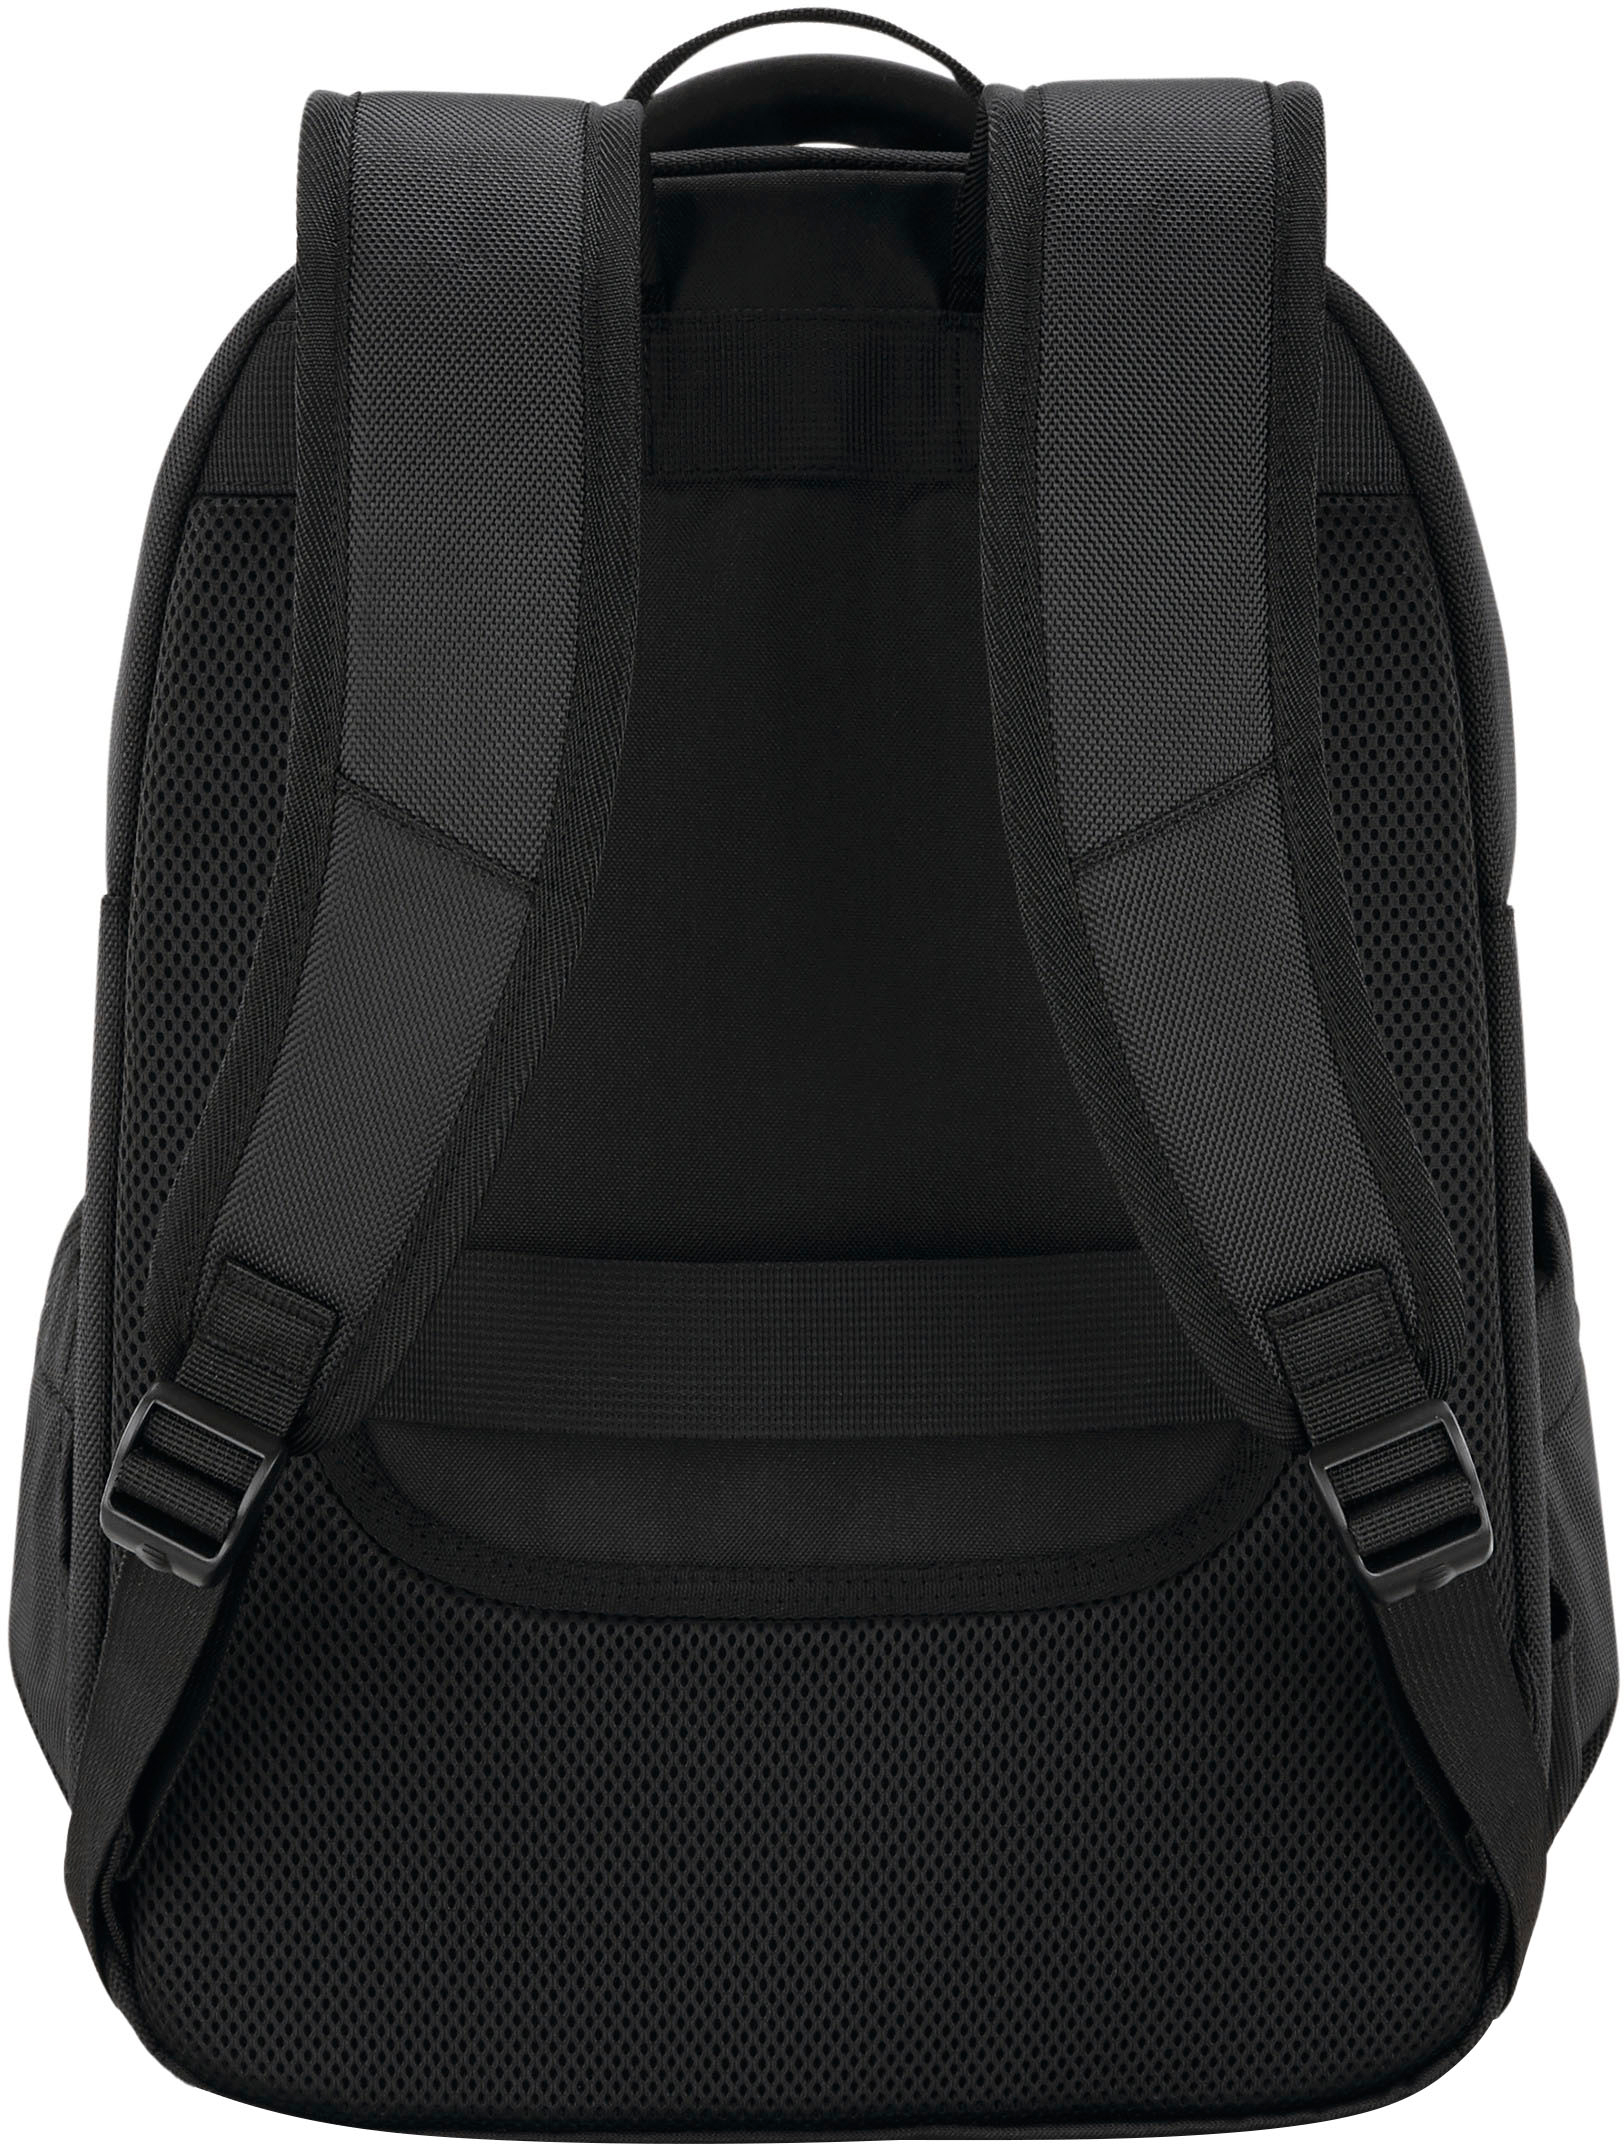 Back View: Samsonite - Laser Pro 2 Laptop Backpack for 15.6" Laptops - Black